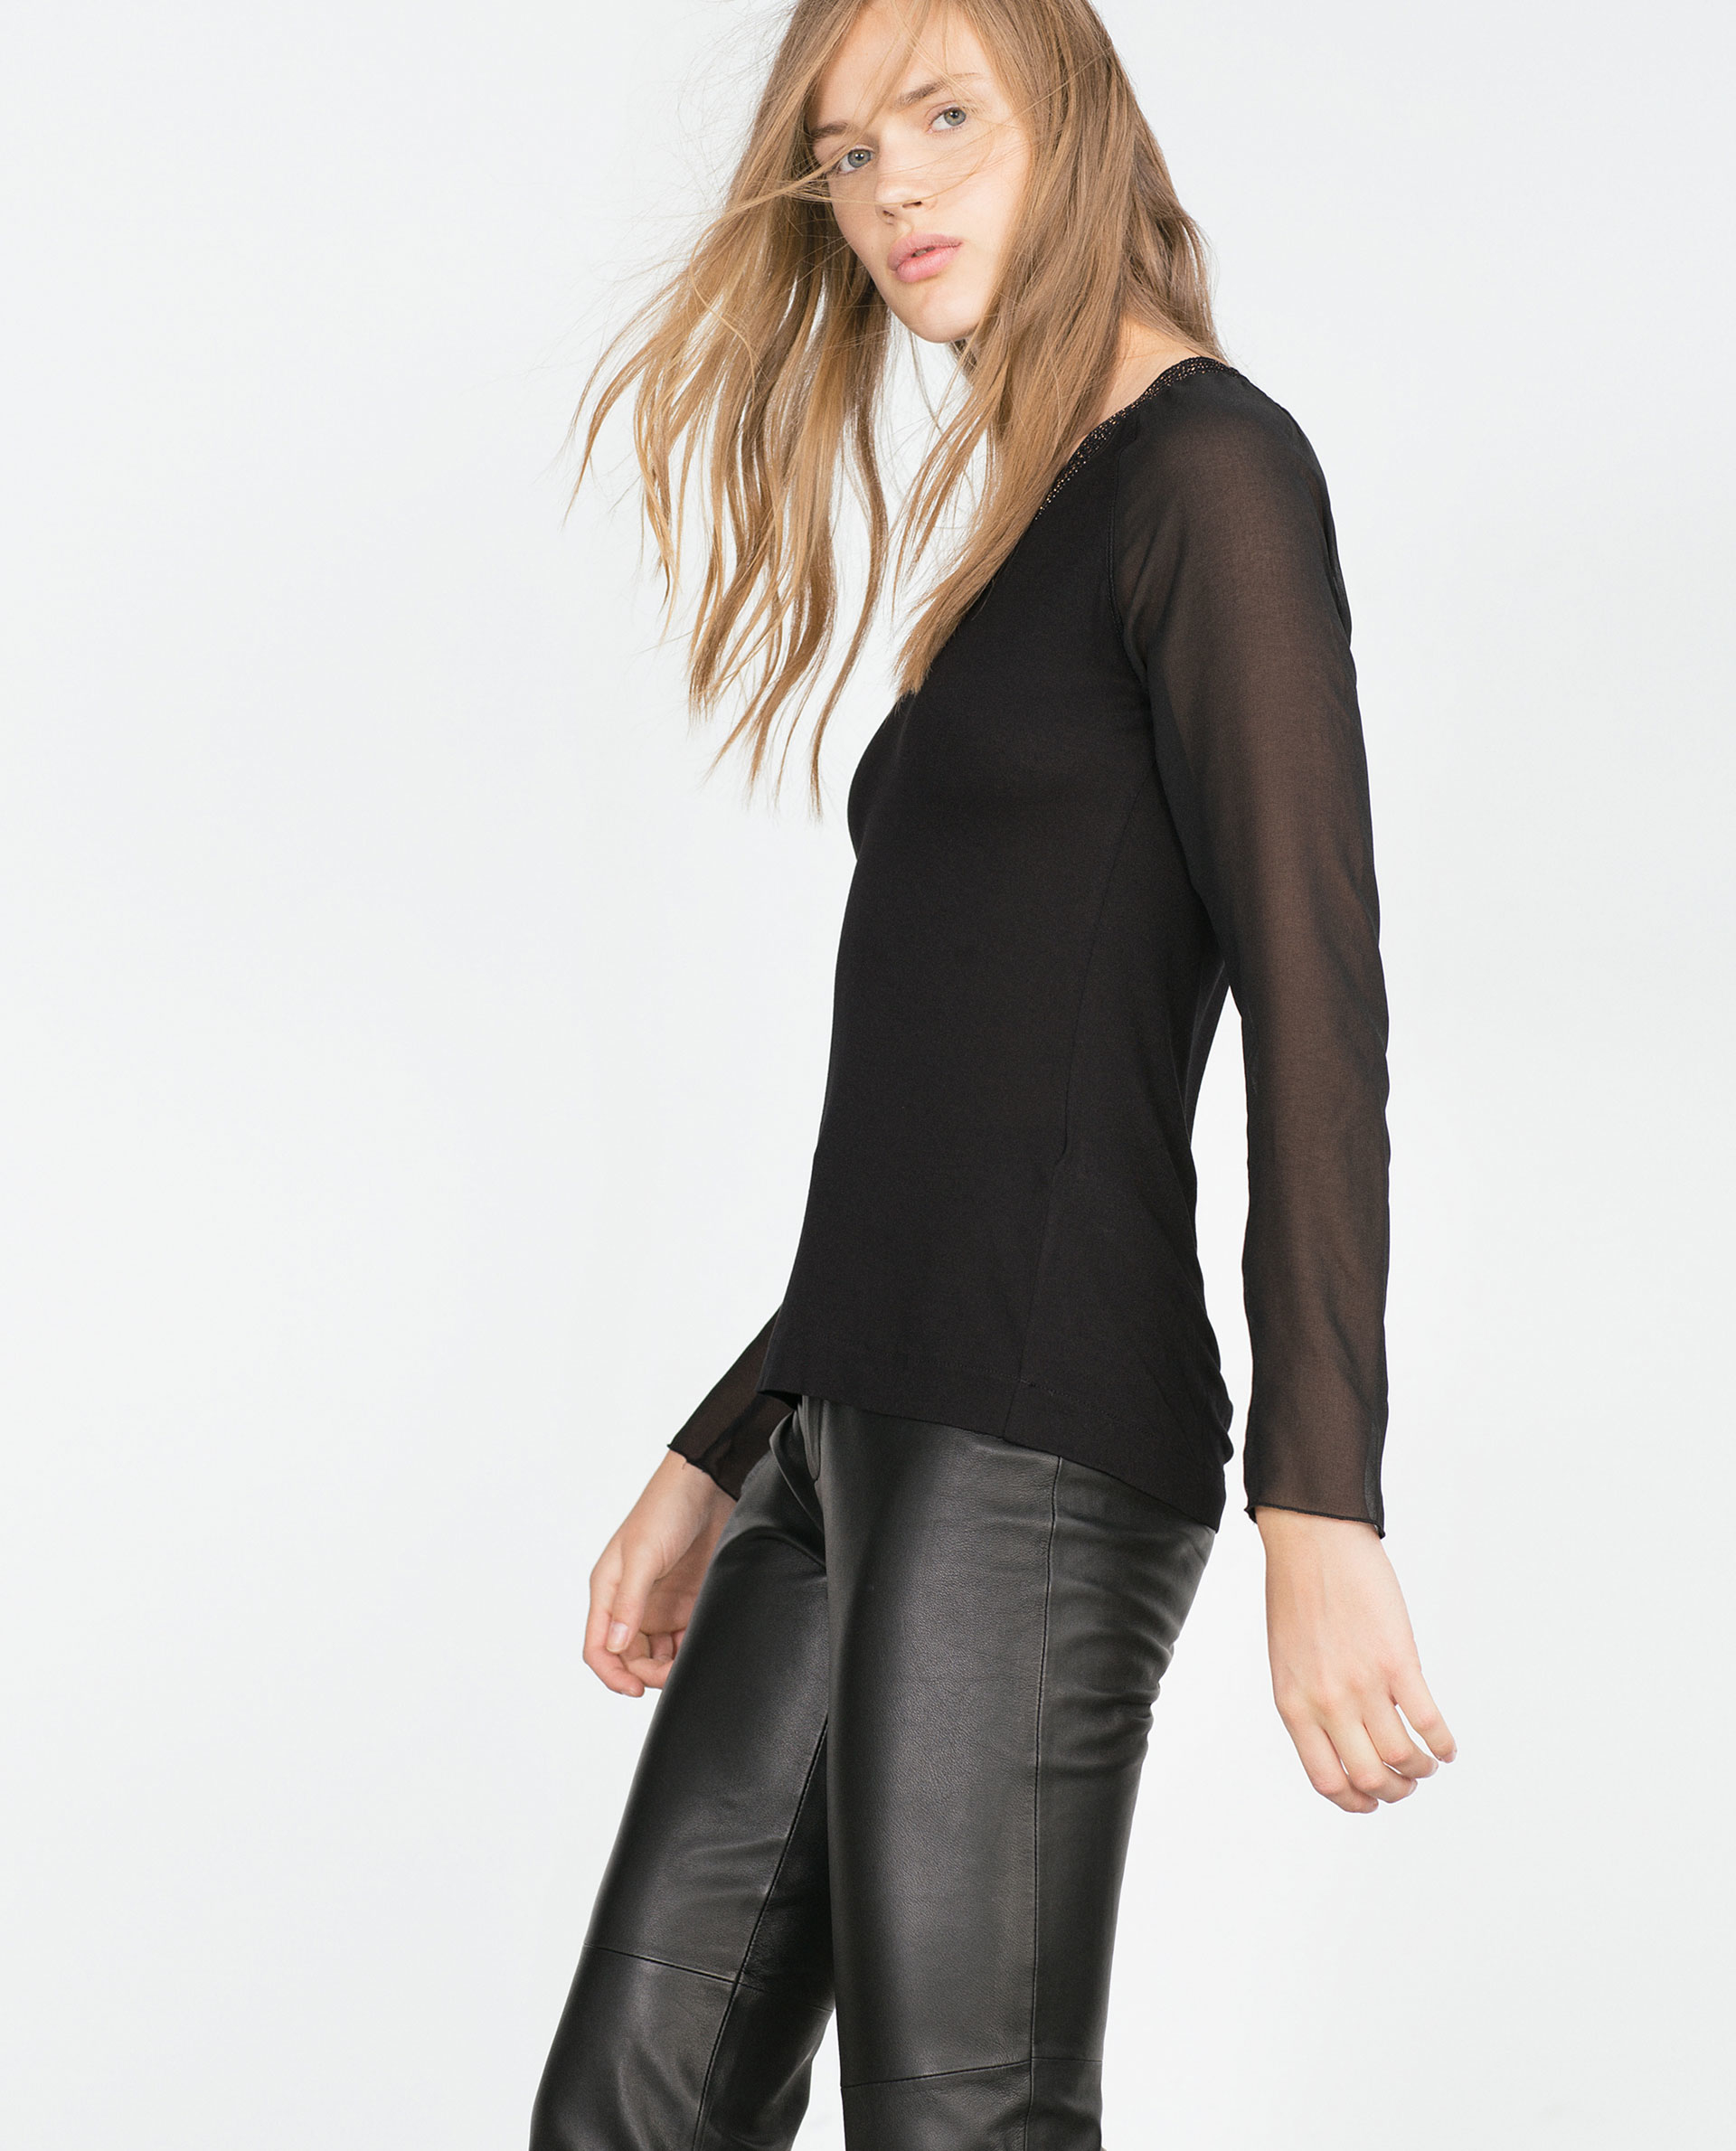 Zara T-shirt With Sheer Sleeves in Black | Lyst